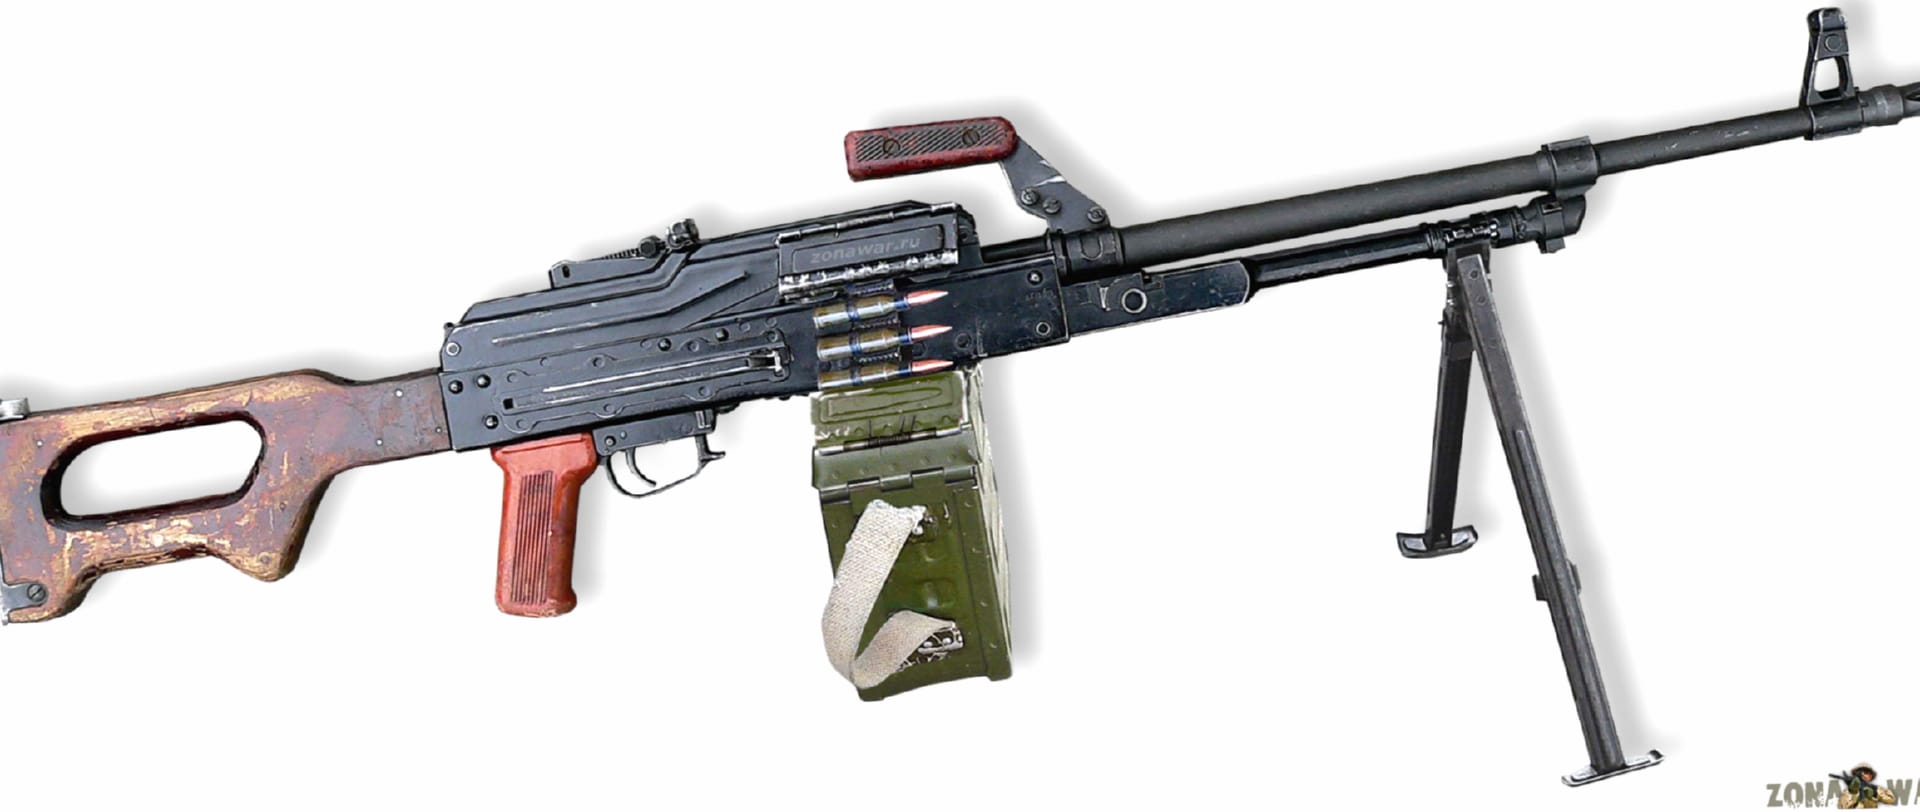 Kalashnikov Pk Rifle at 640 x 960 iPhone 4 size wallpapers HD quality